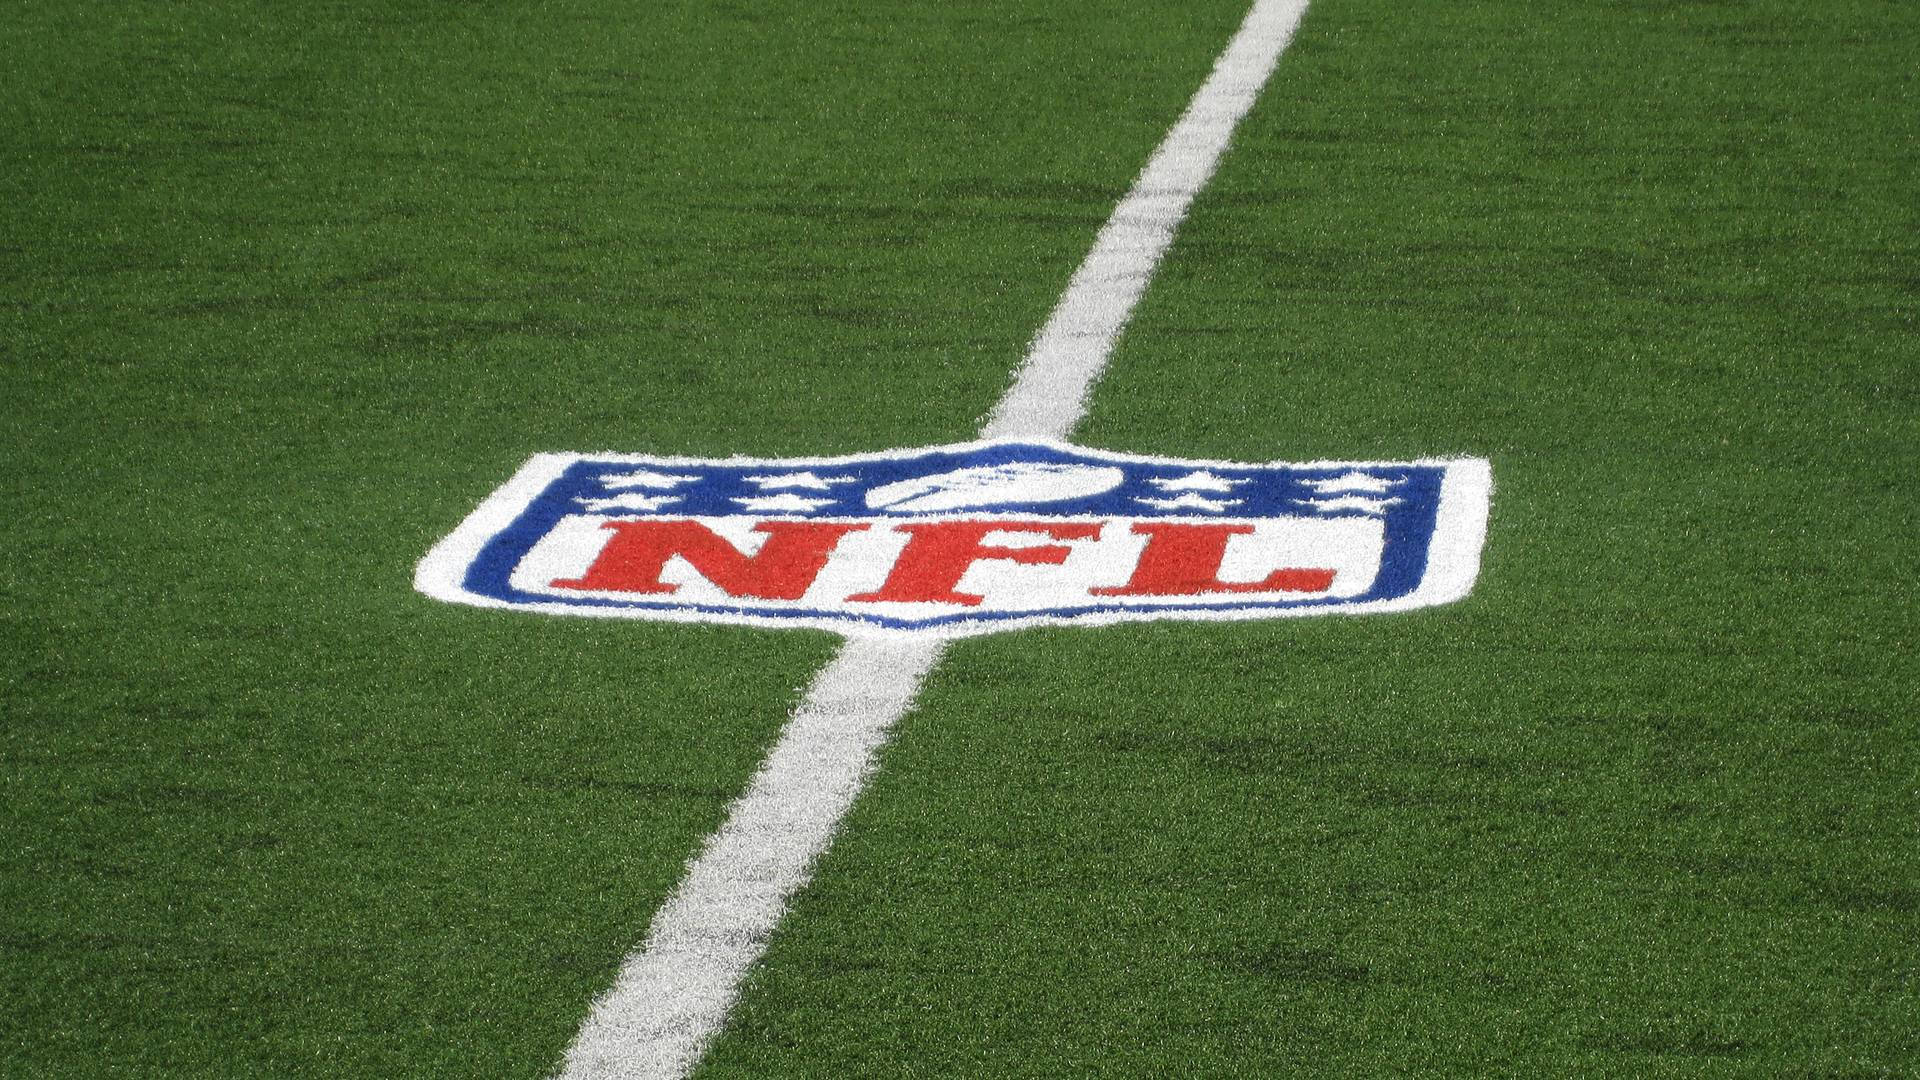 Nfl Football Logo On Field Background